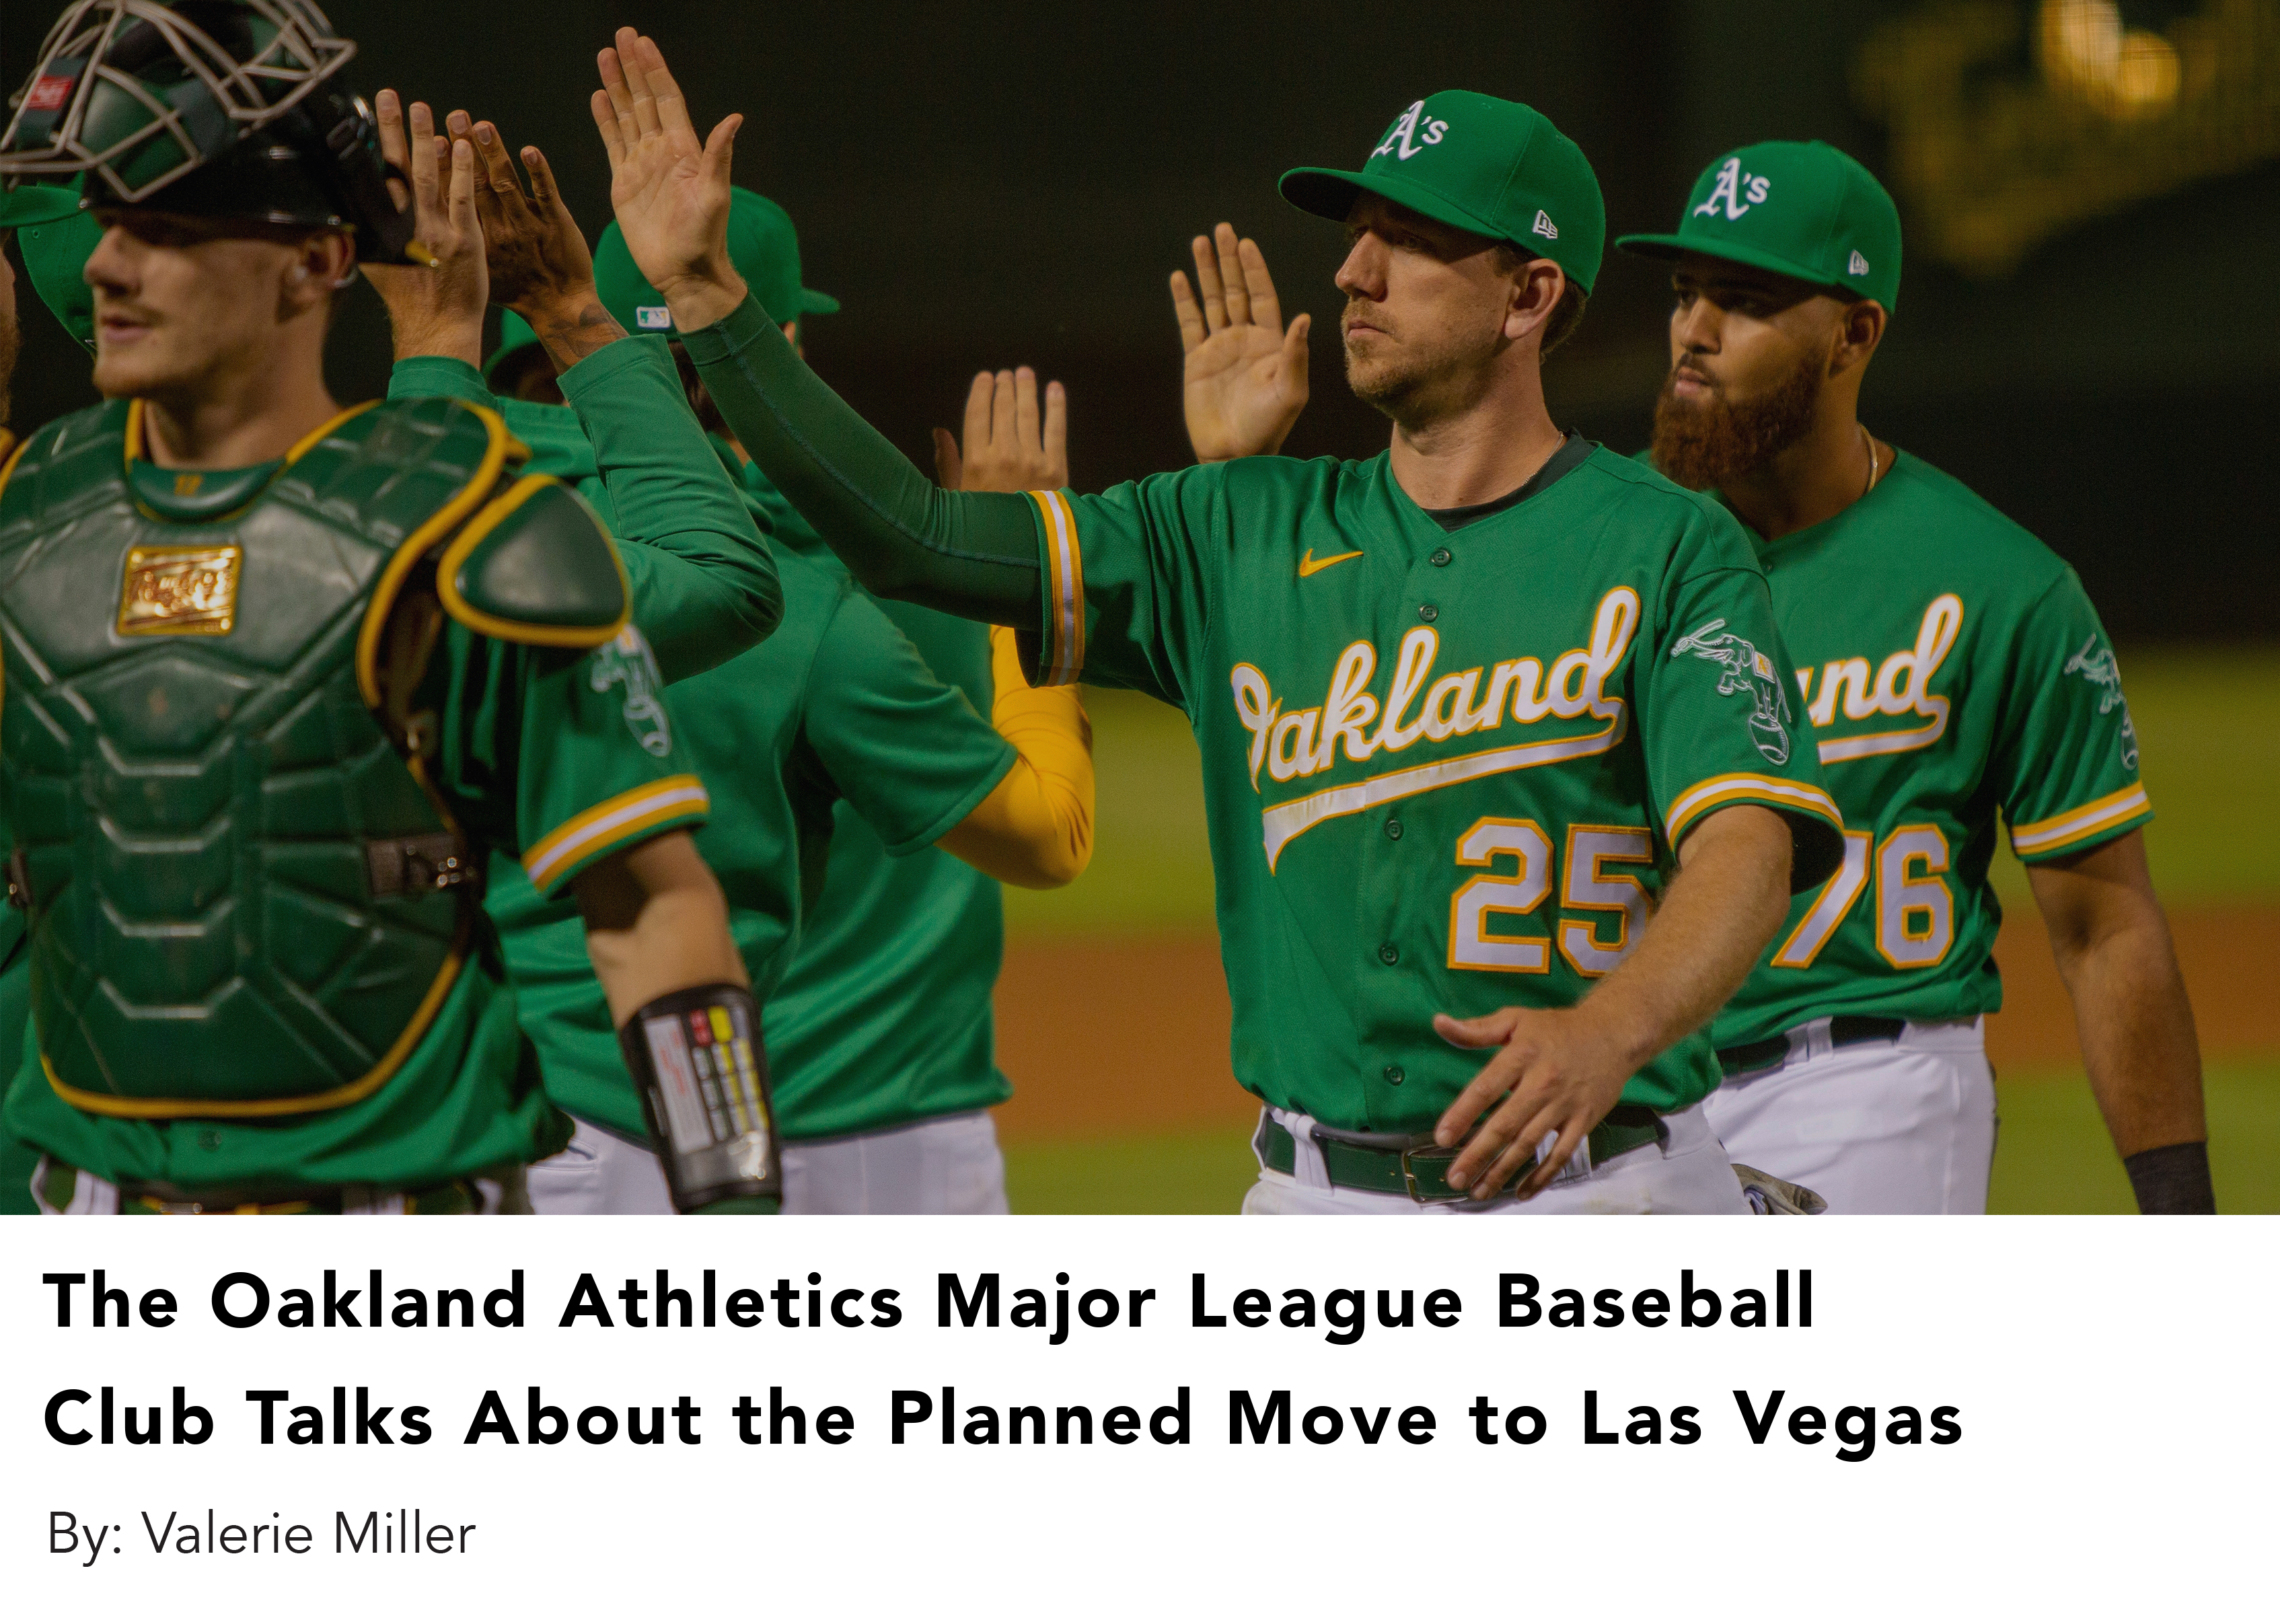 The Oakland Athletics Major League Baseball Club Talks About the